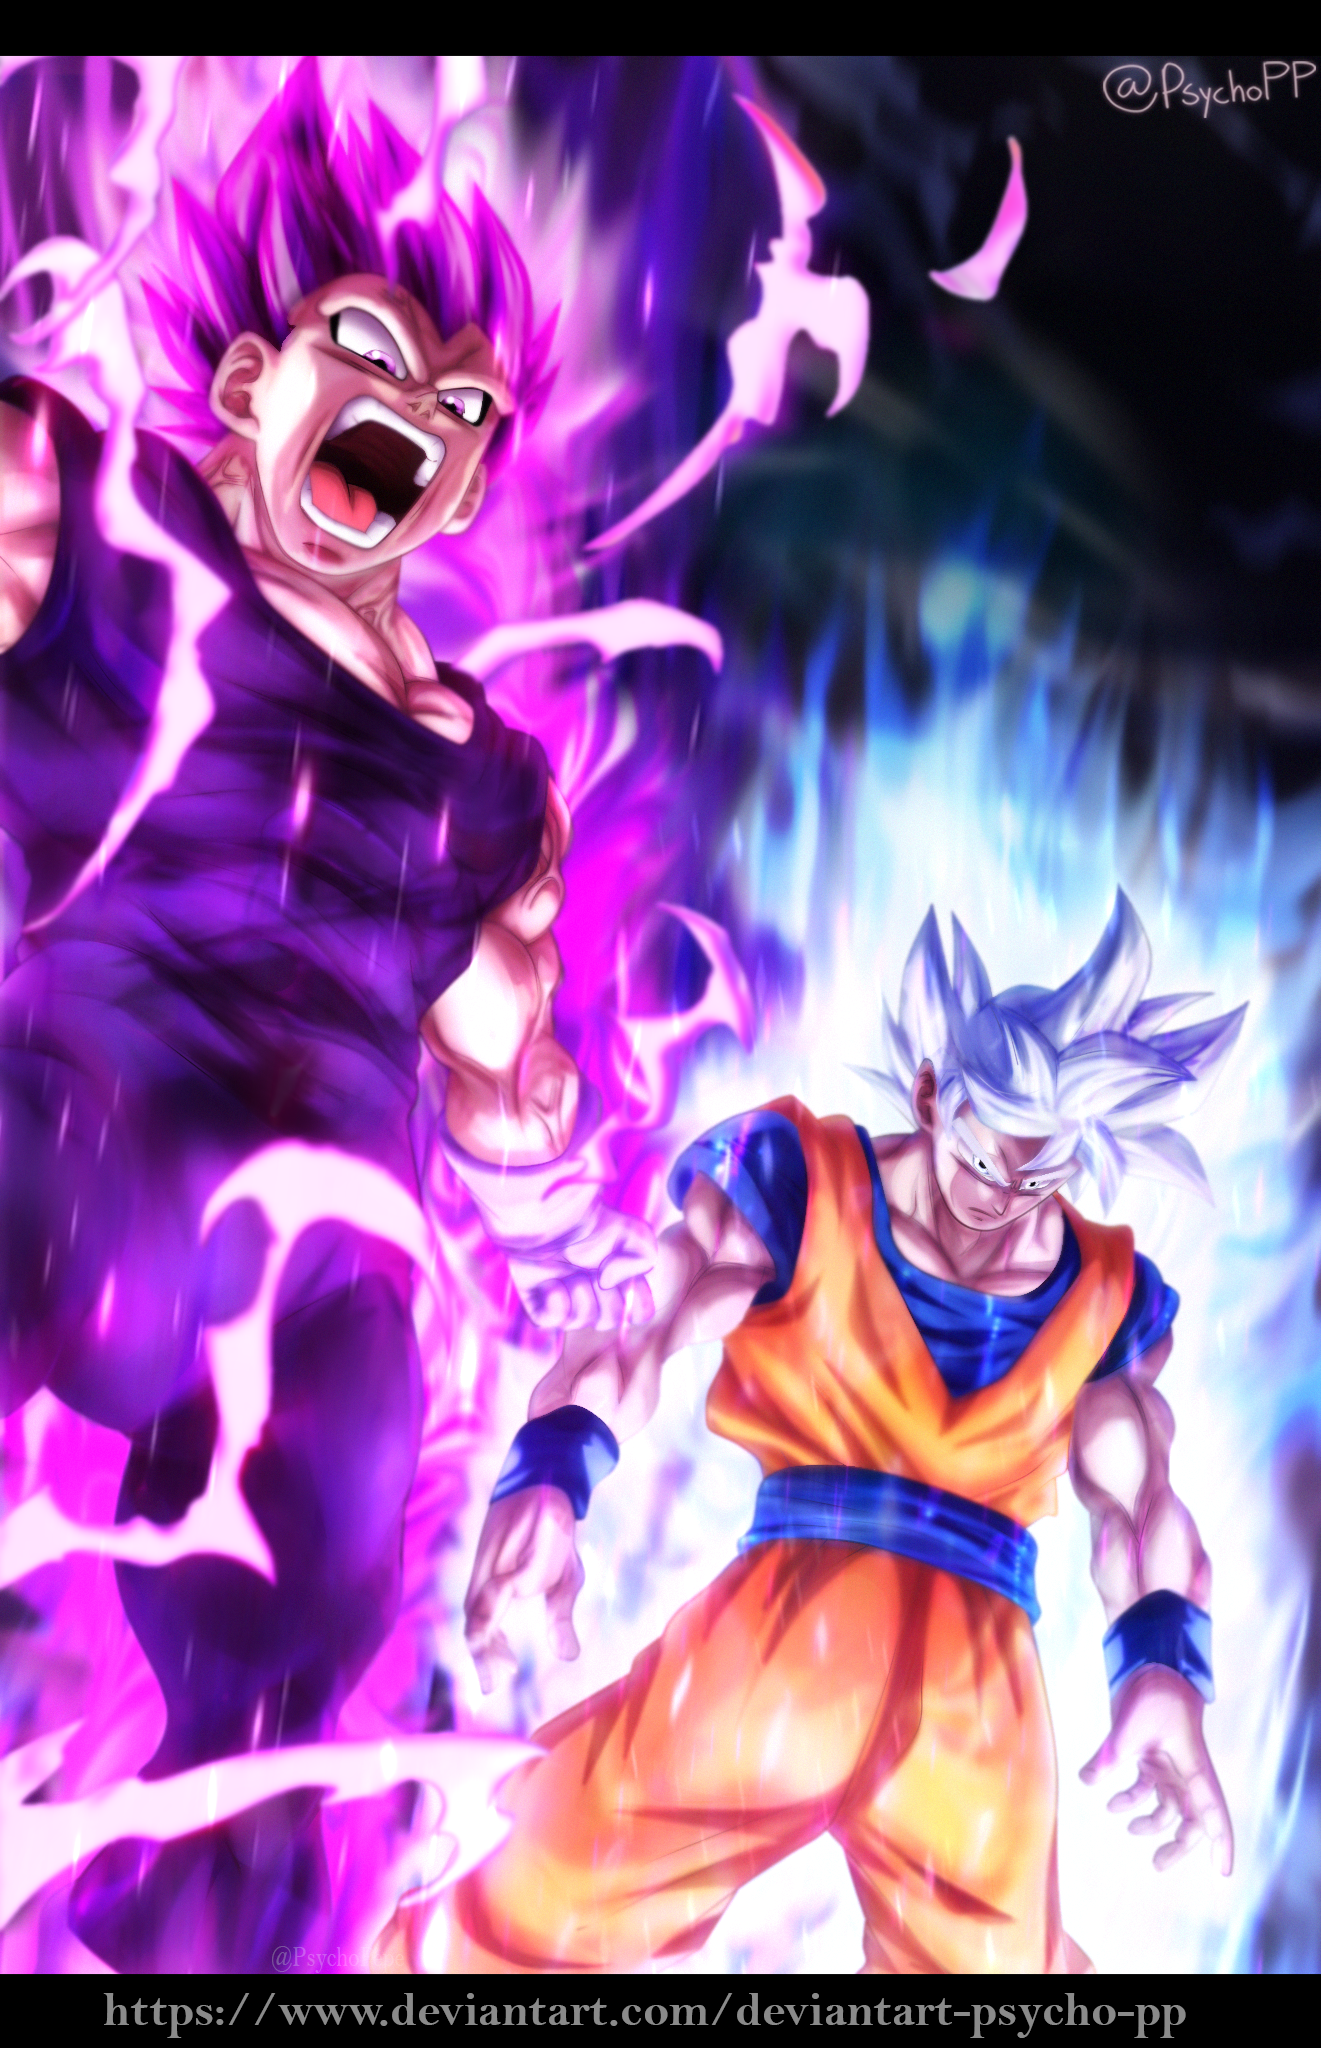 Goku and Vegeta- Dragon ball Super 84 by KagawariDraws on DeviantArt